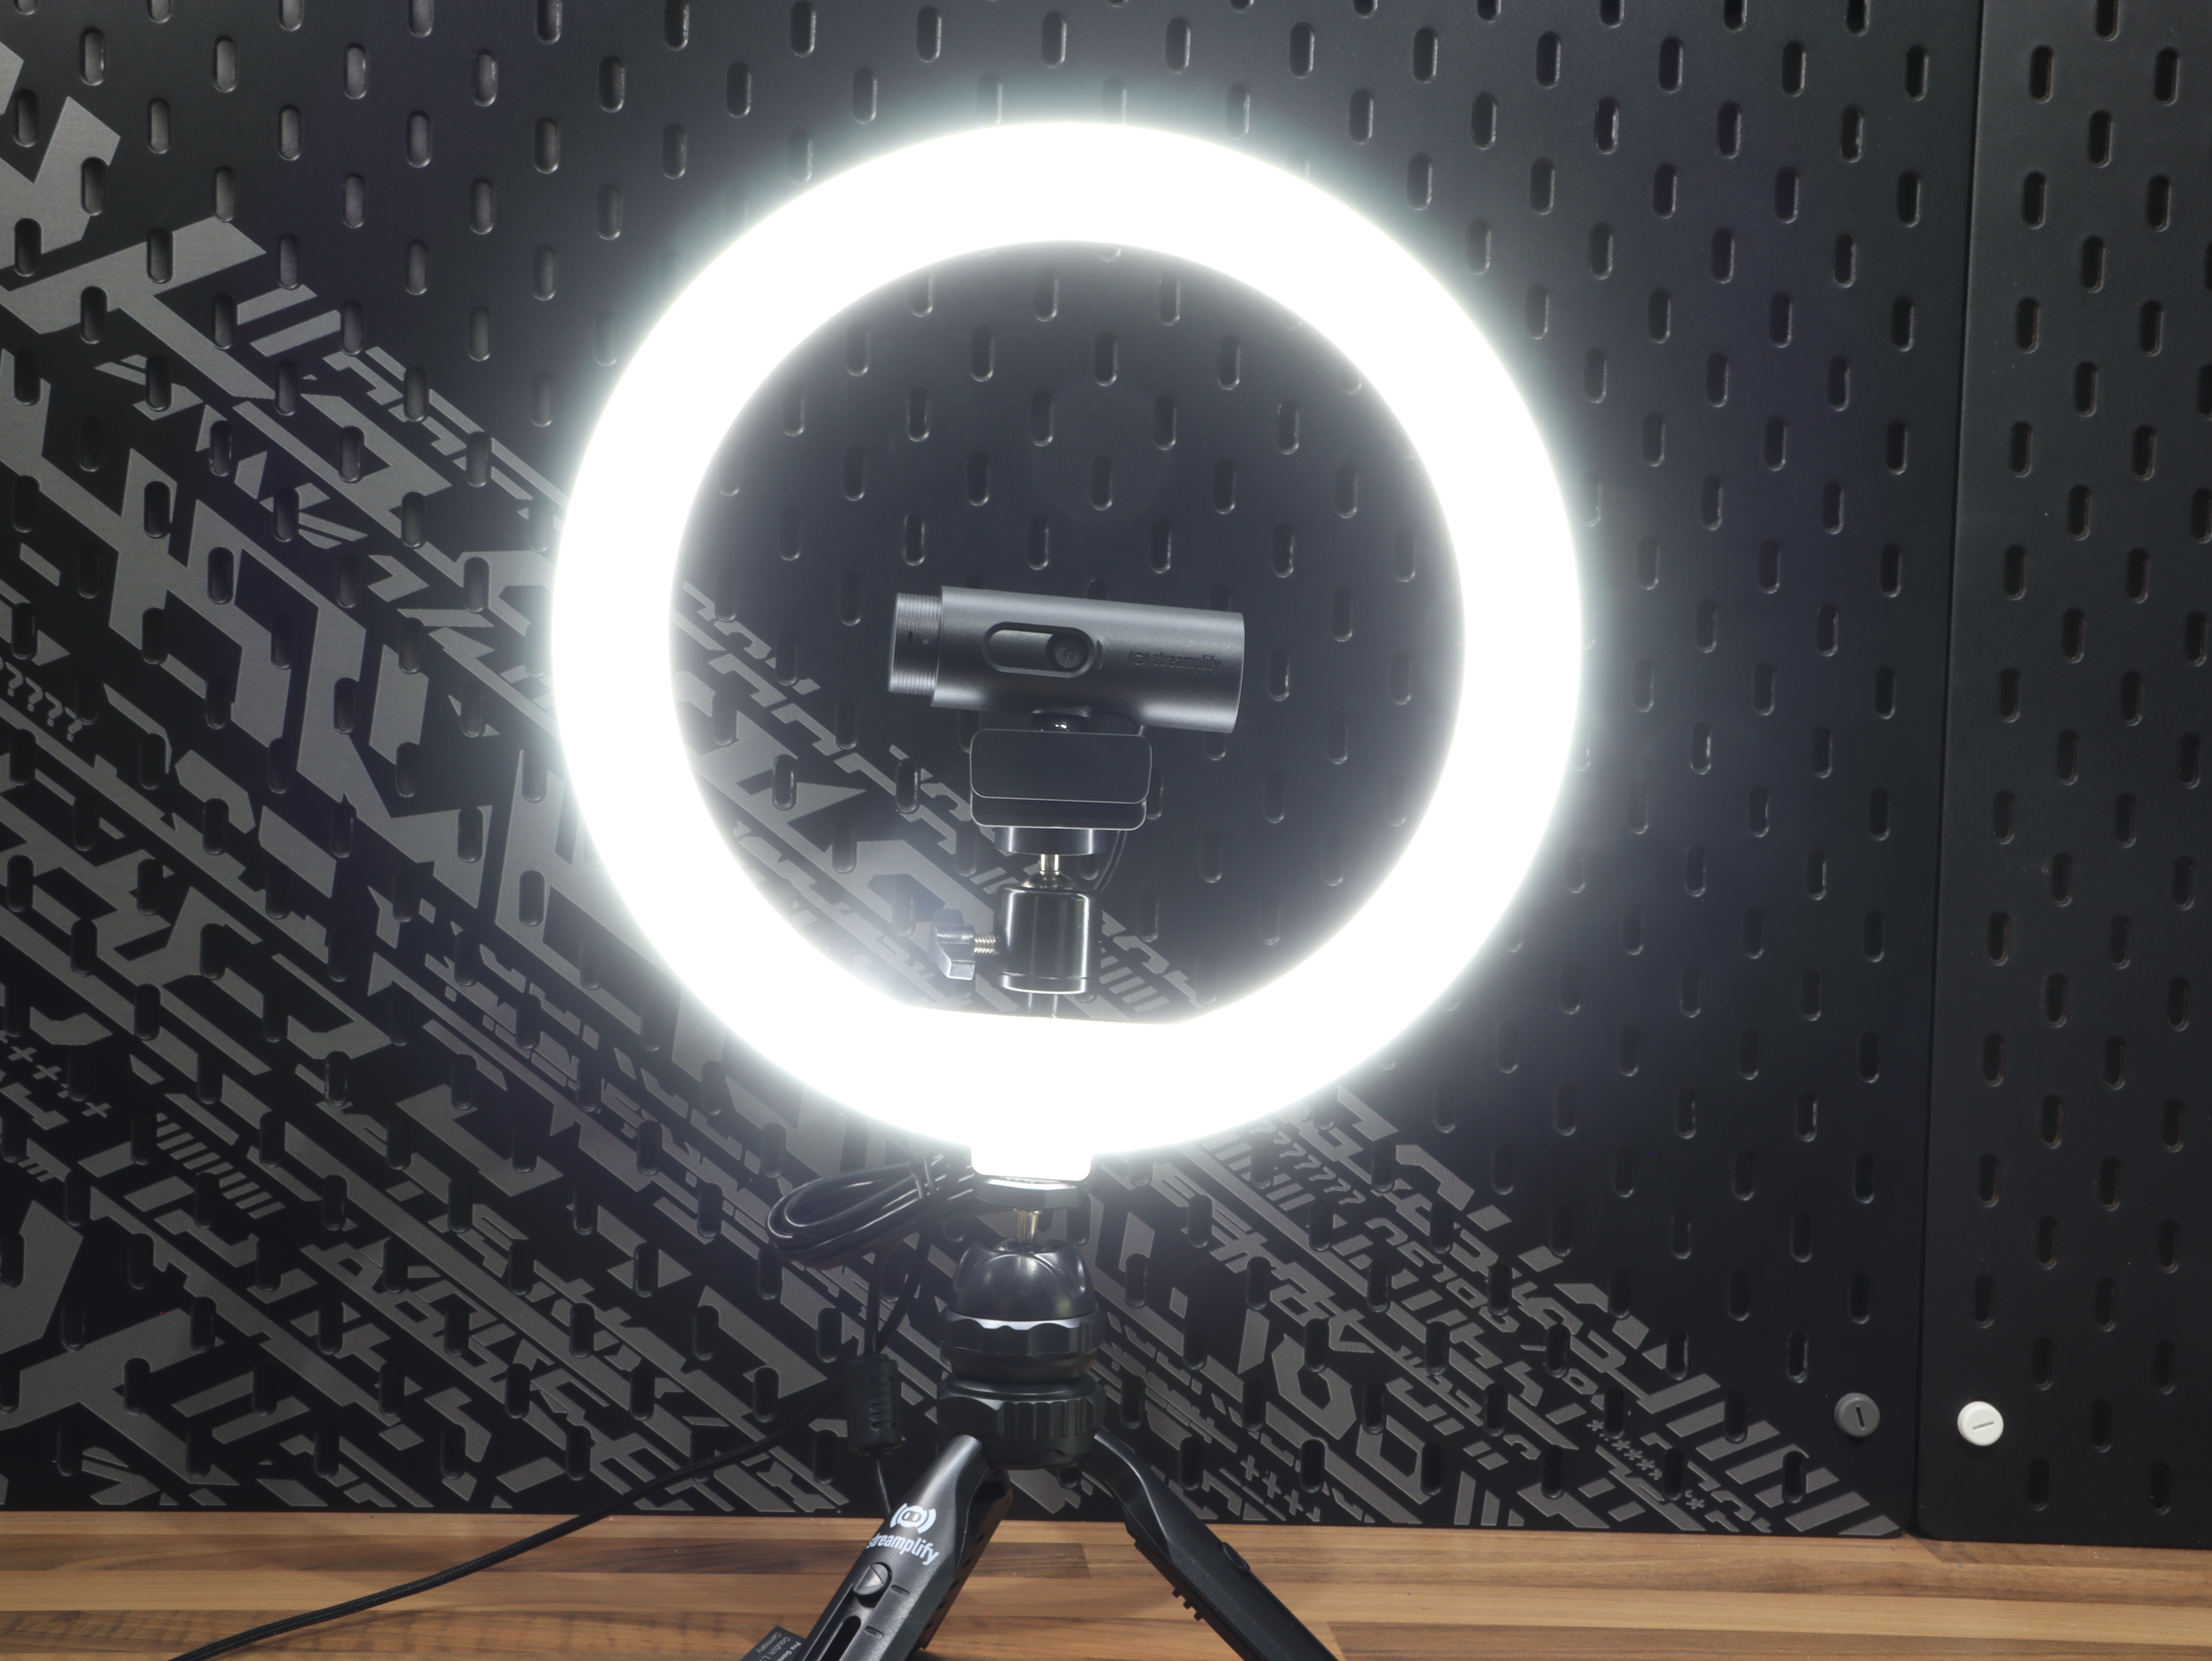 plates FHD sound RGB slim mic streaming cam focus 10 auto Streamplify 14 fps acoustic light lumen arm podcast.JPG